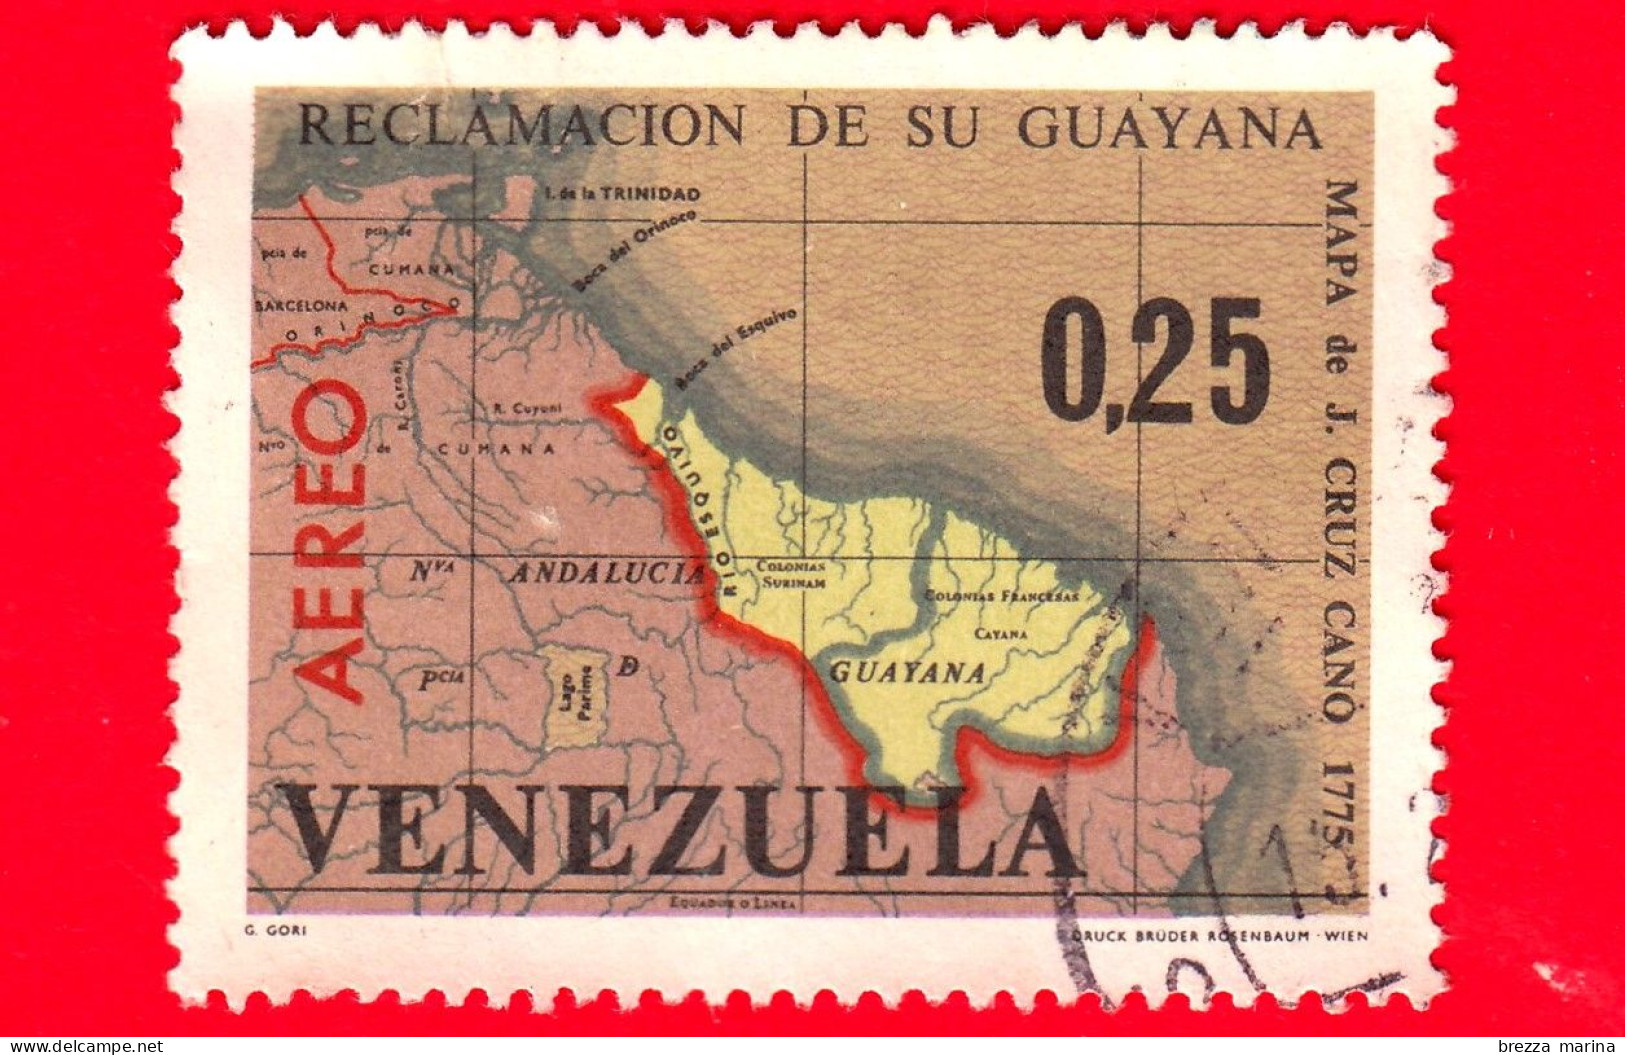 VENEZUELA - Usato - 1965 - Rivendicazione Territoriale Di Esequiba Guyana - Mappa Di Cruz Cano - 0.25 - P. Aerea - Venezuela